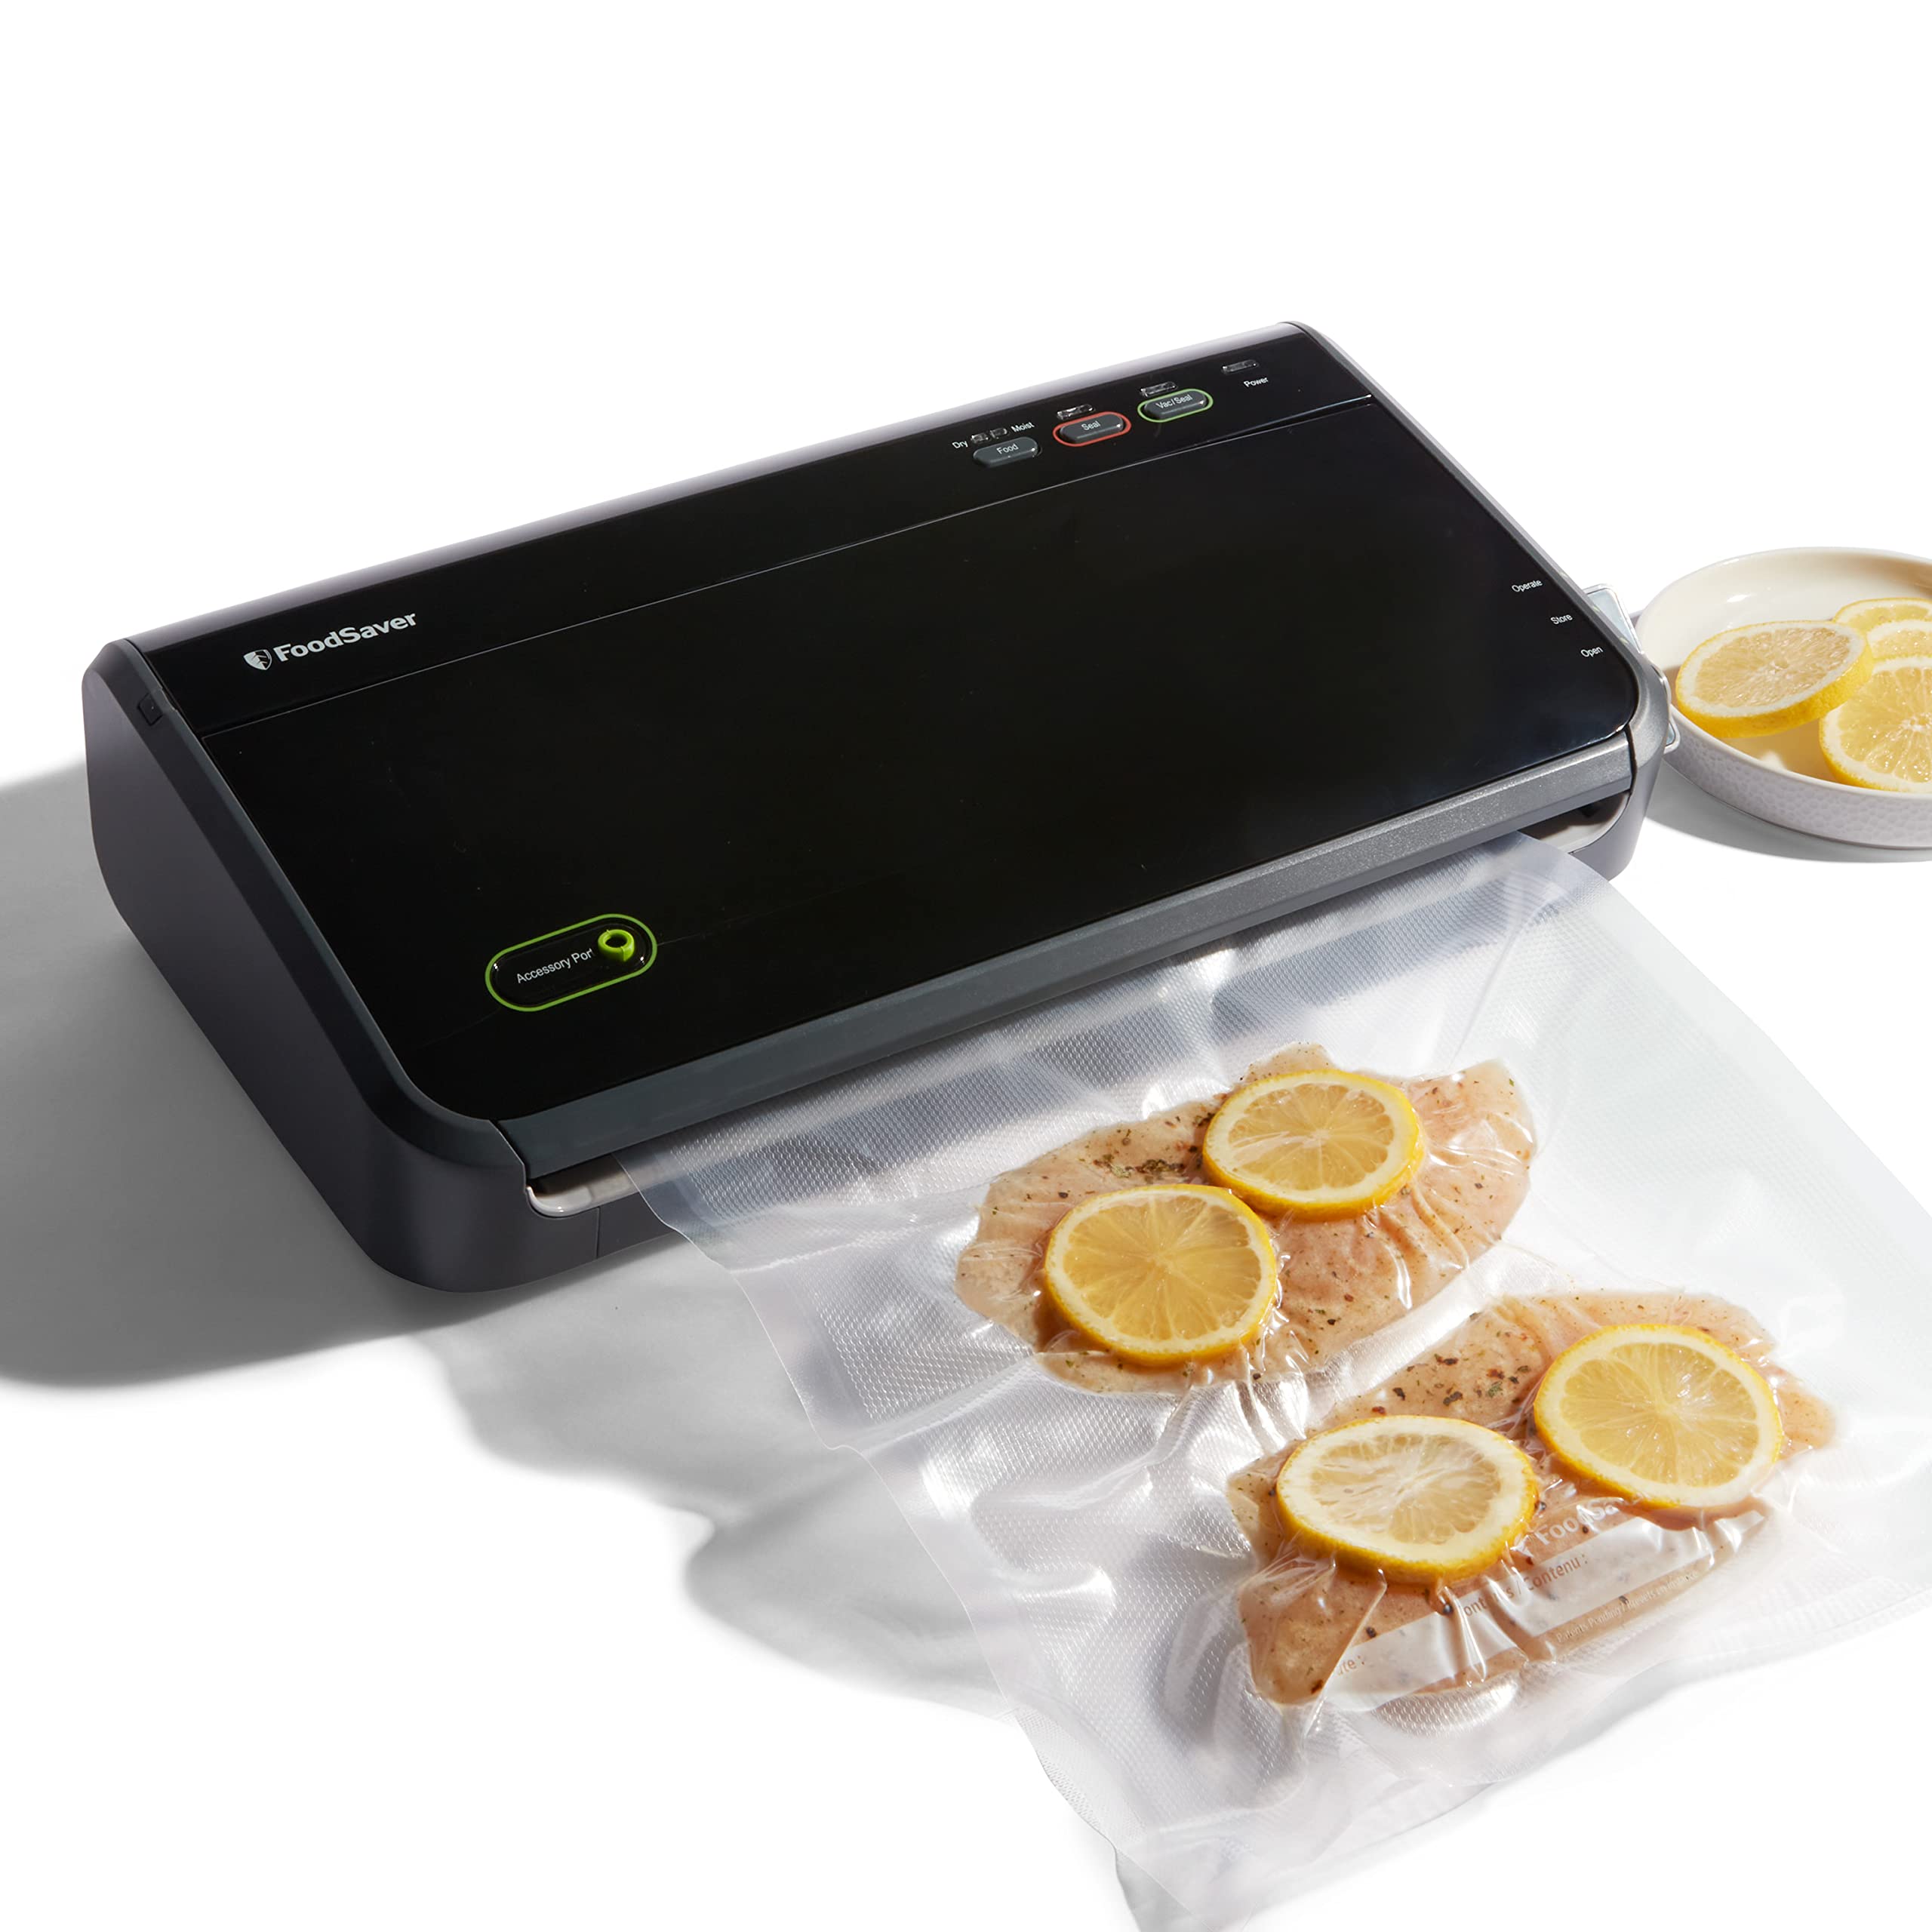 FoodSaver Vacuum Sealer Machine with Automatic Bag Detection